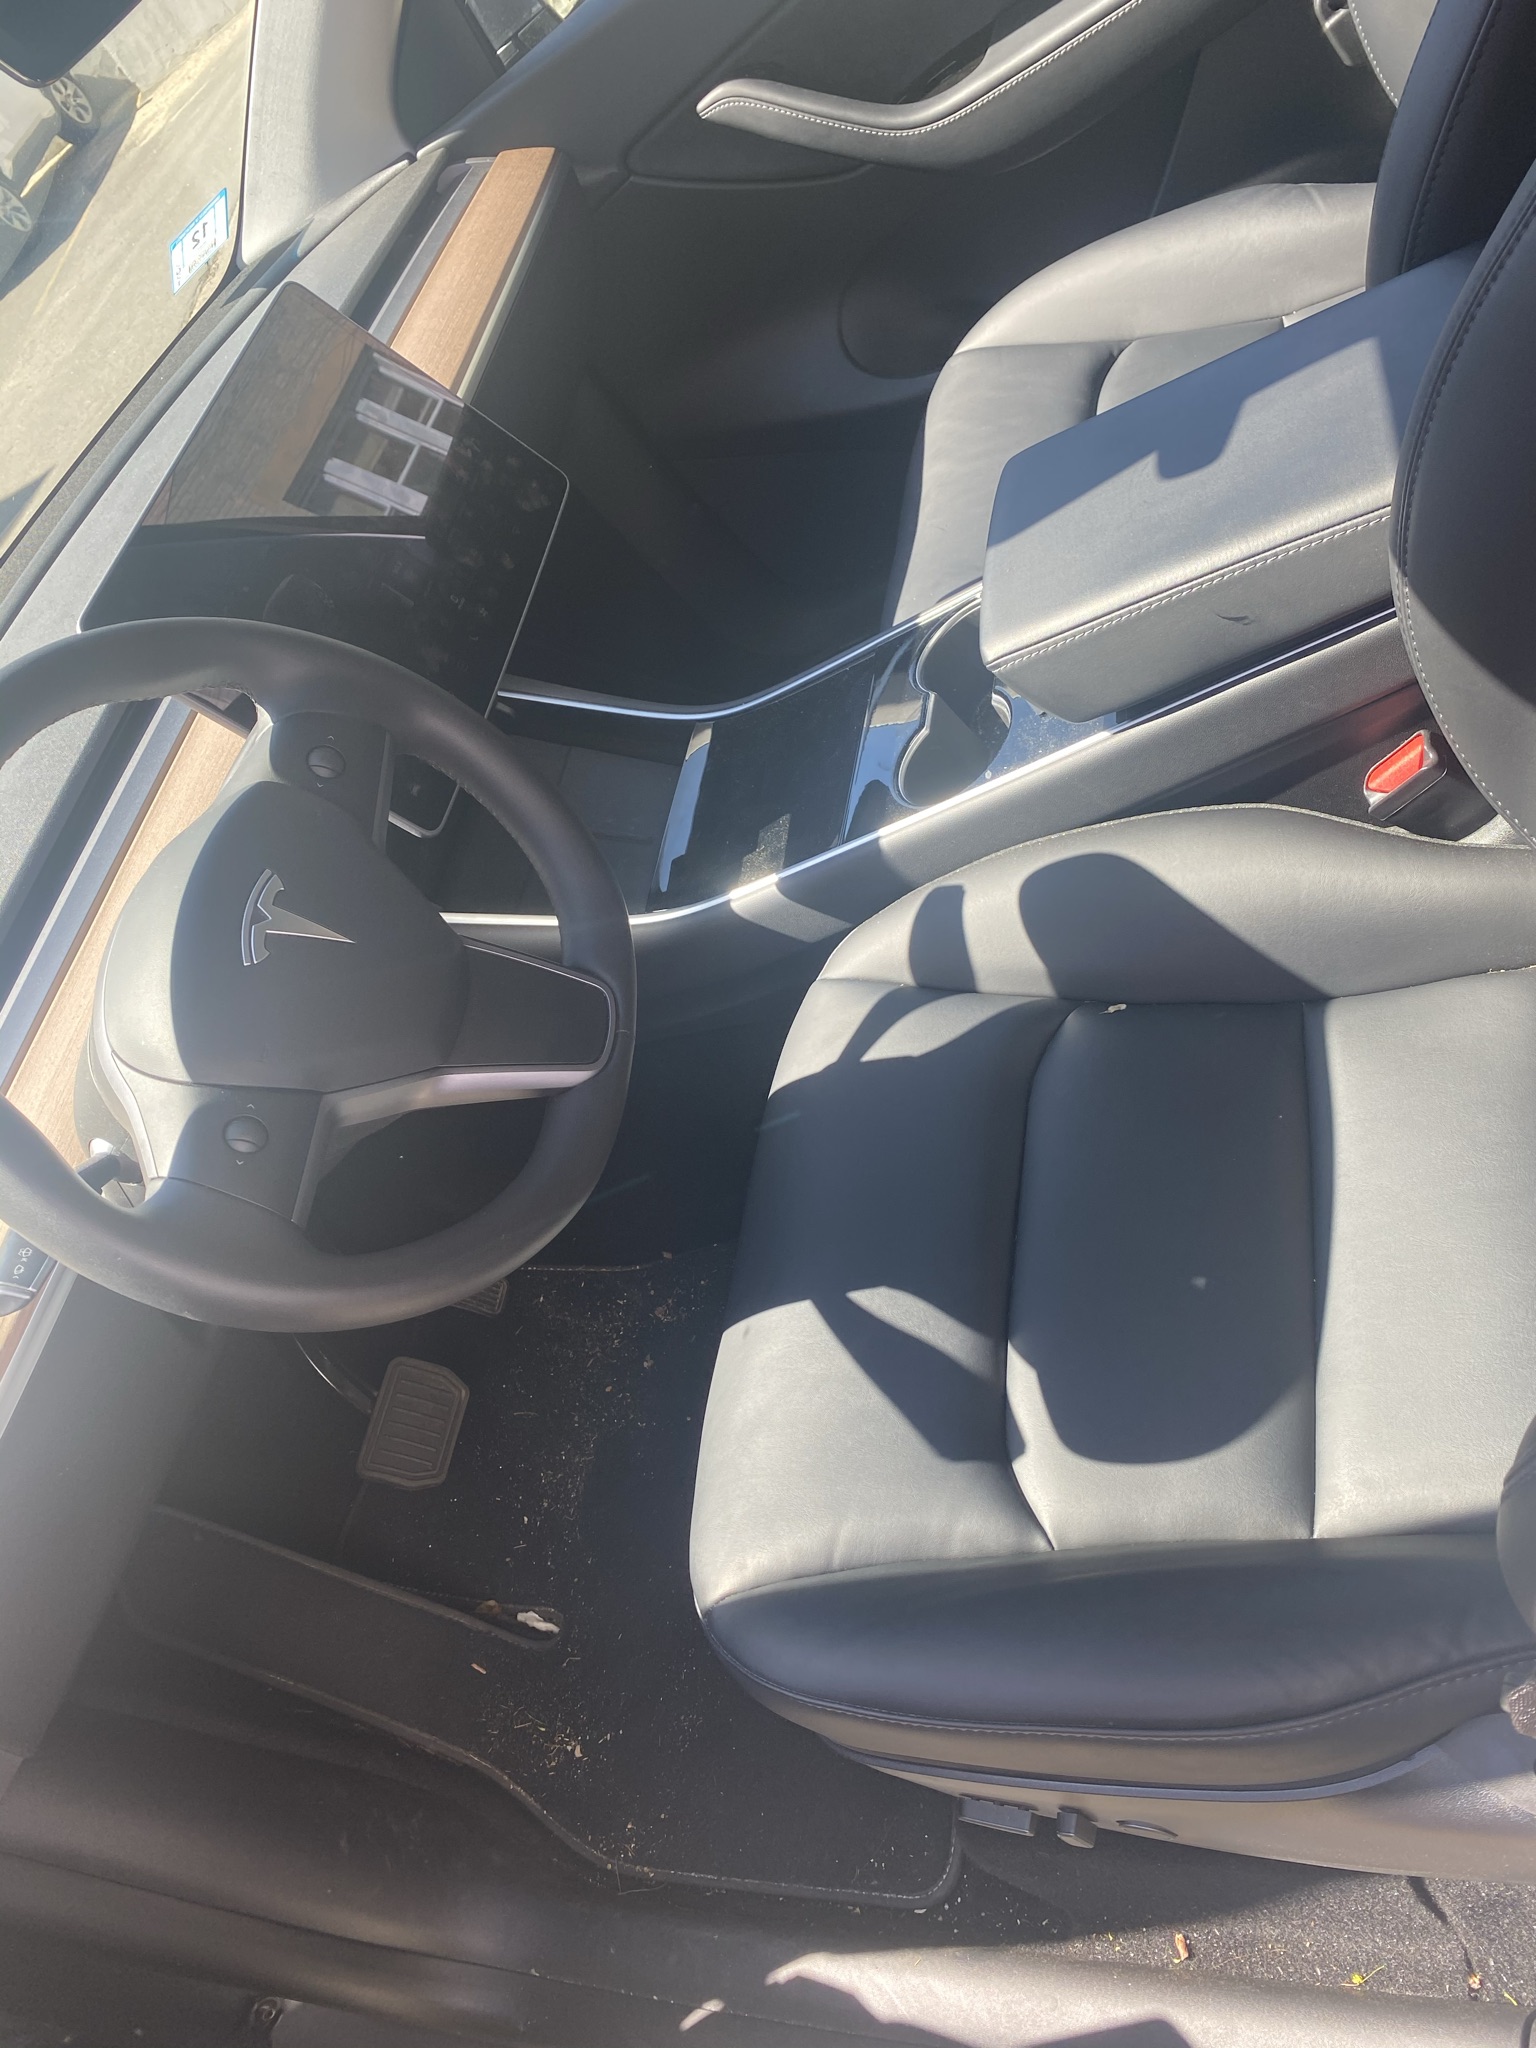 Tesla model 3 interior before detail